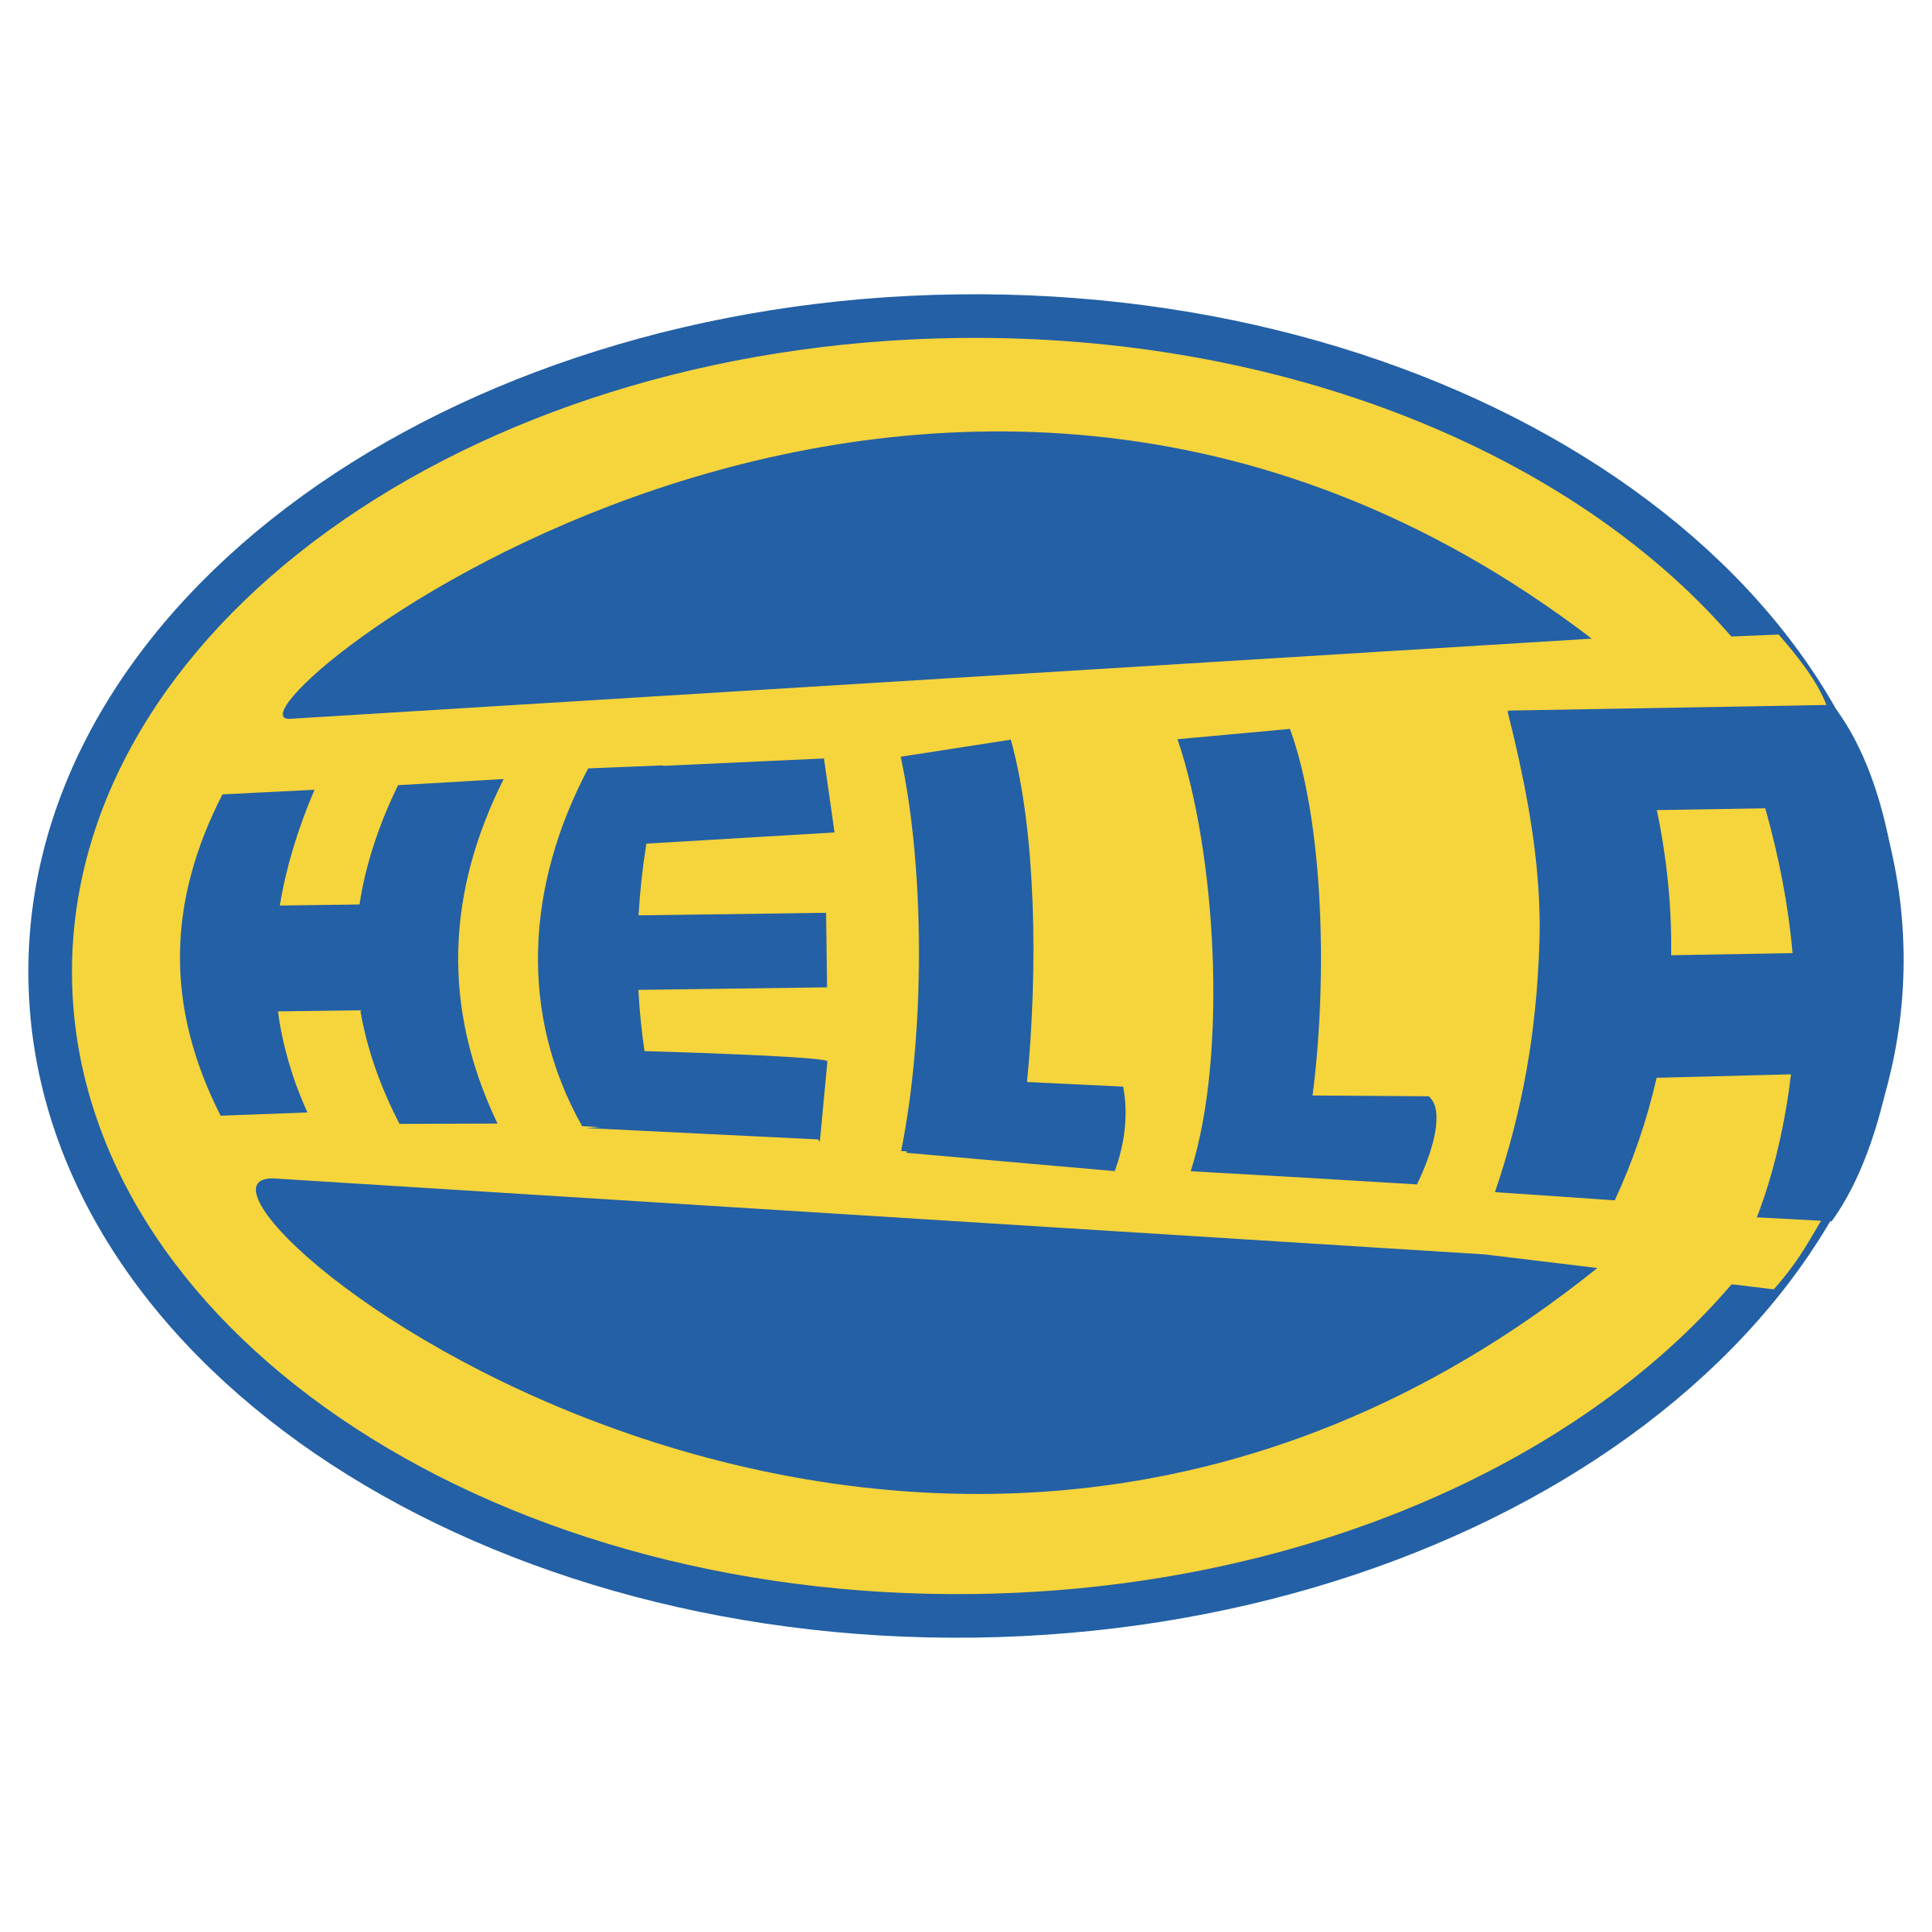 Hella Logo - Hella Logo PNG Transparent & SVG Vector - Freebie Supply